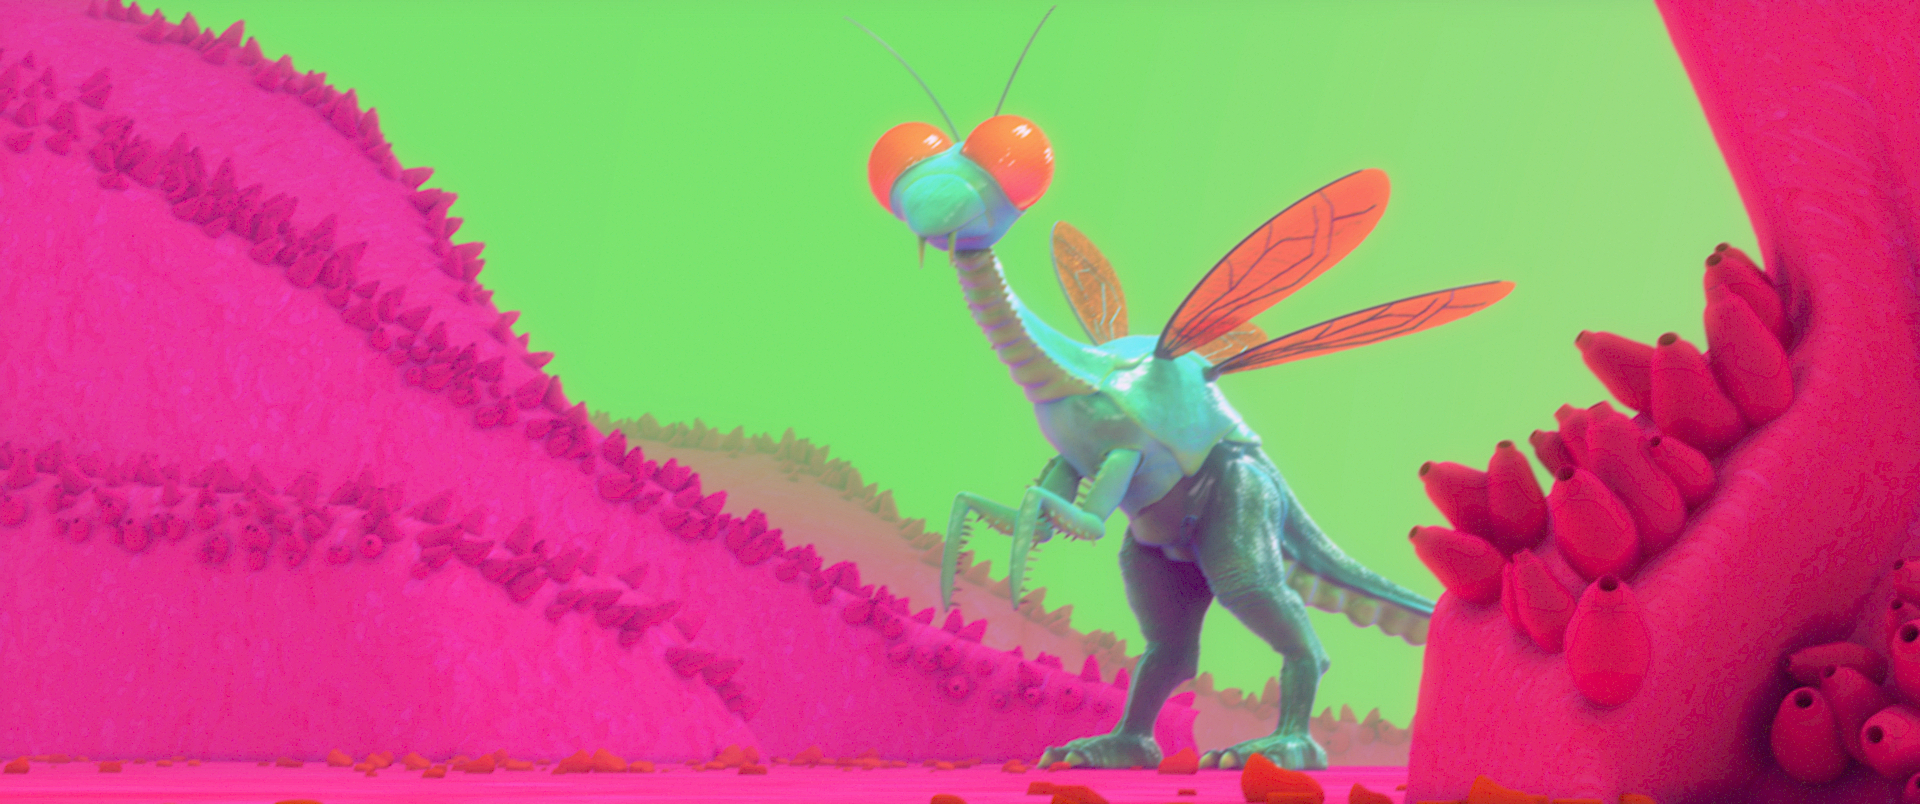 mantisaurus 3d dinosaur insect design in surreal alien landscape